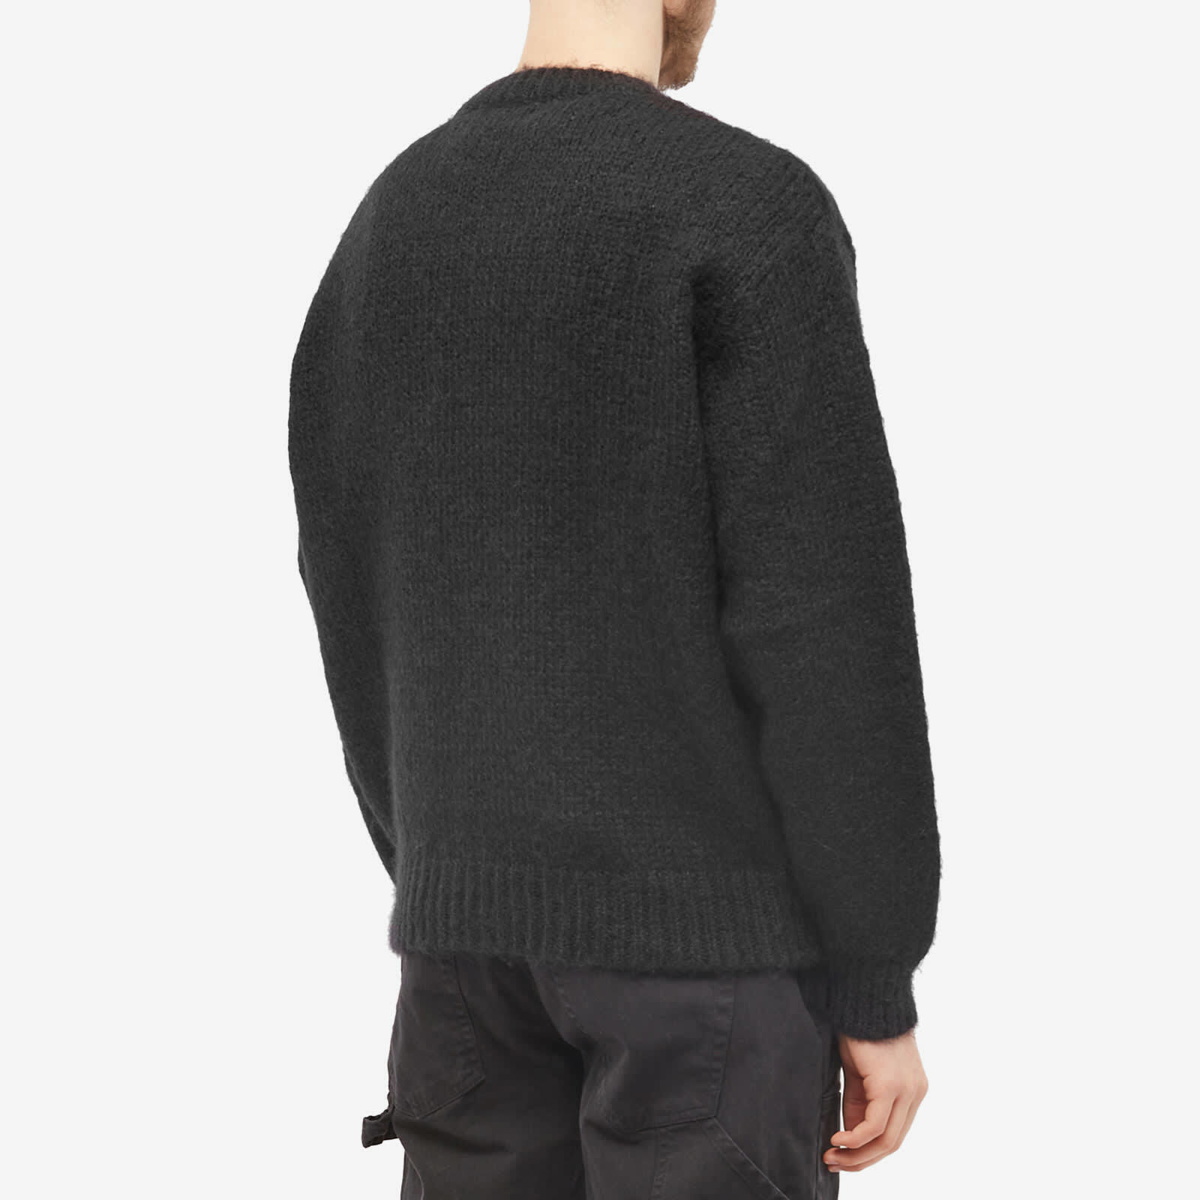 Represent Men's Mohair Sweater in Black Represent